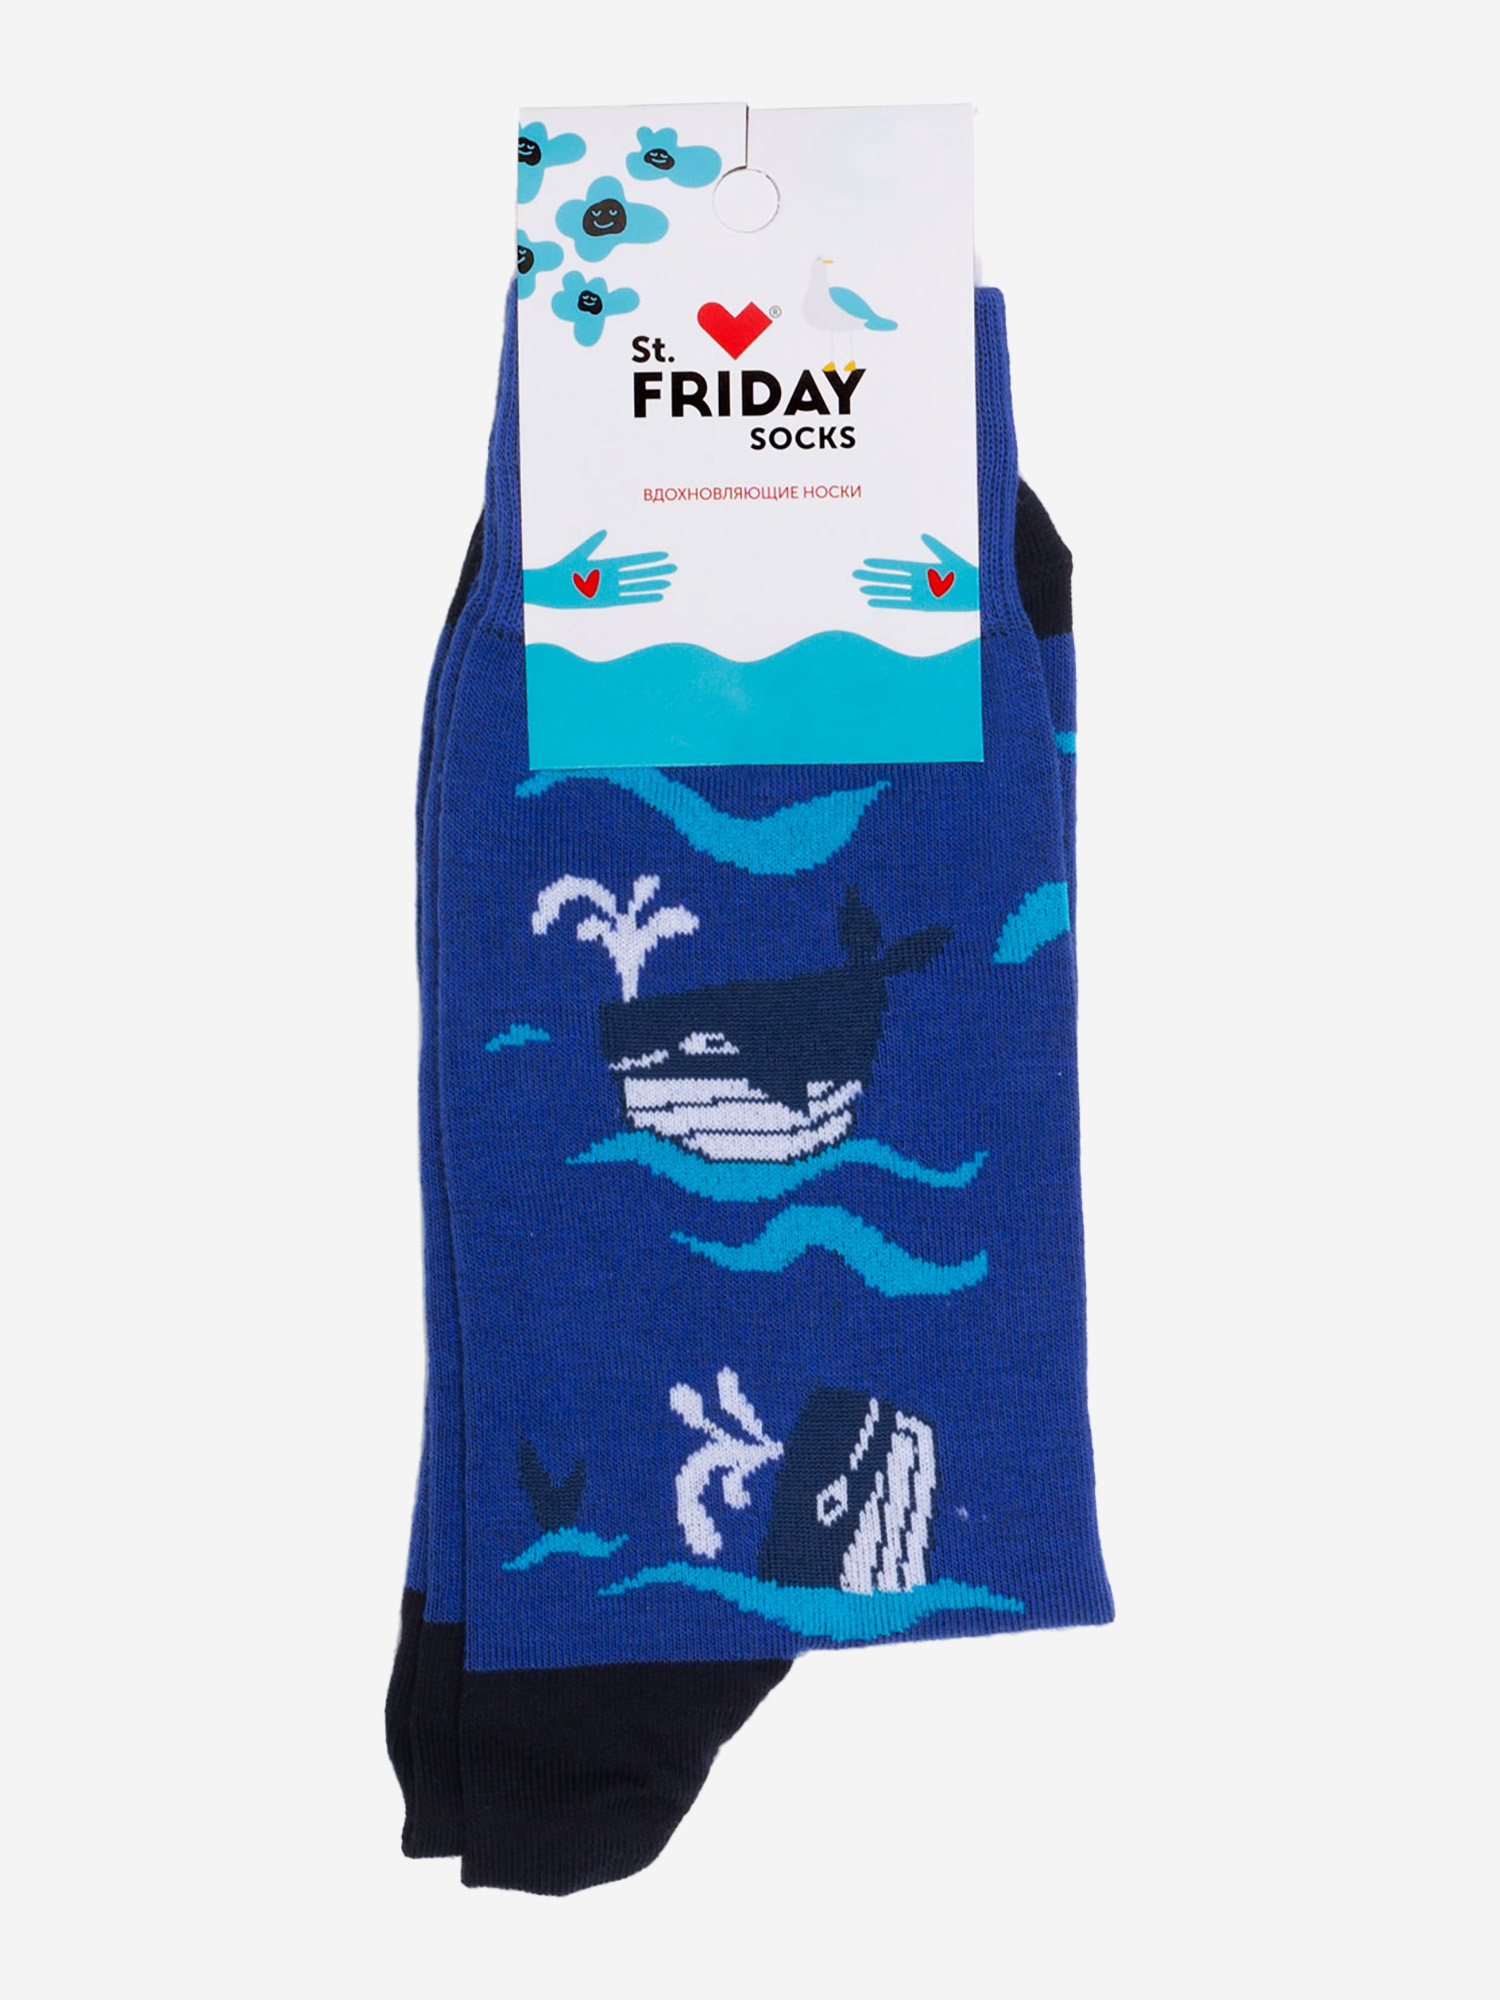 Носки с рисунками St.Friday Socks - Киты, Синий